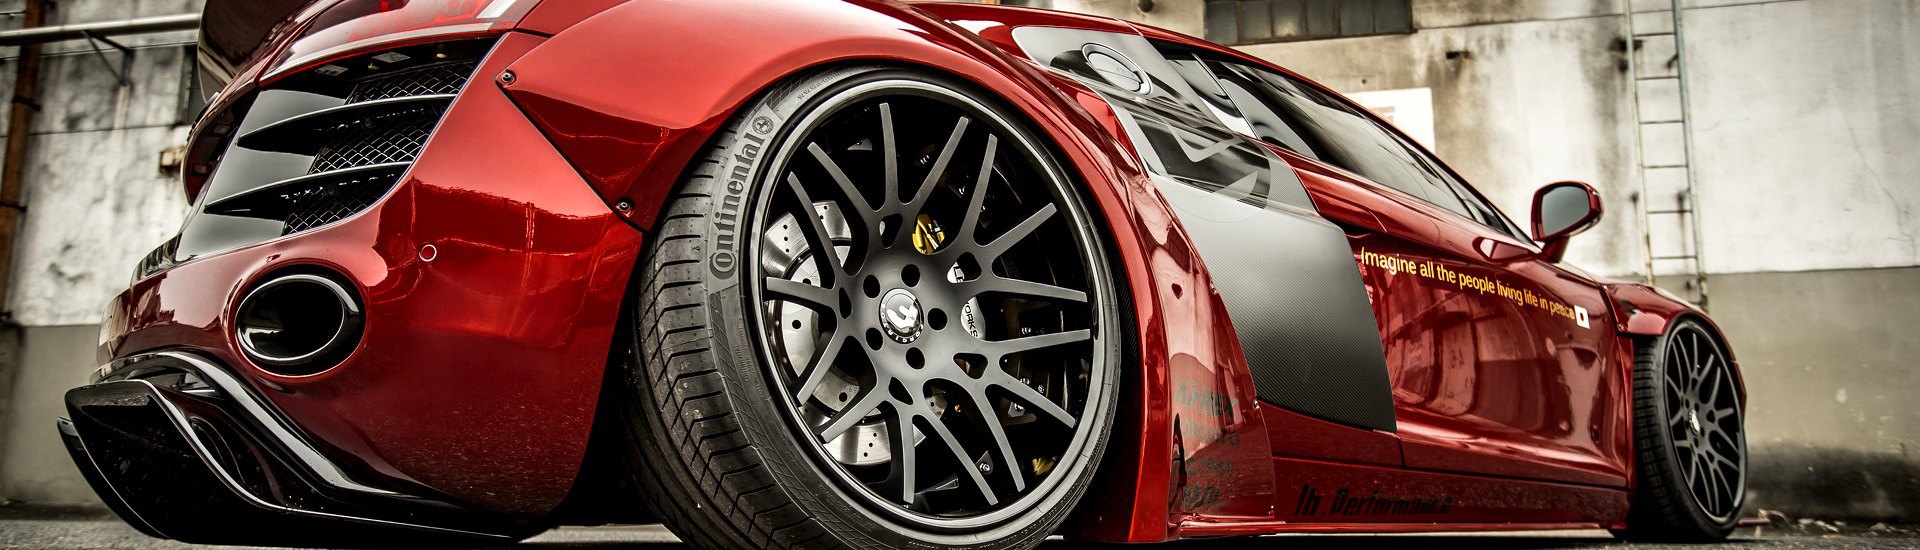 100% Premium】For Audi A4 B8 A5 Q5 Interior Accessories Carbon Fiber Car  Center Control Gear B36B | Lazada